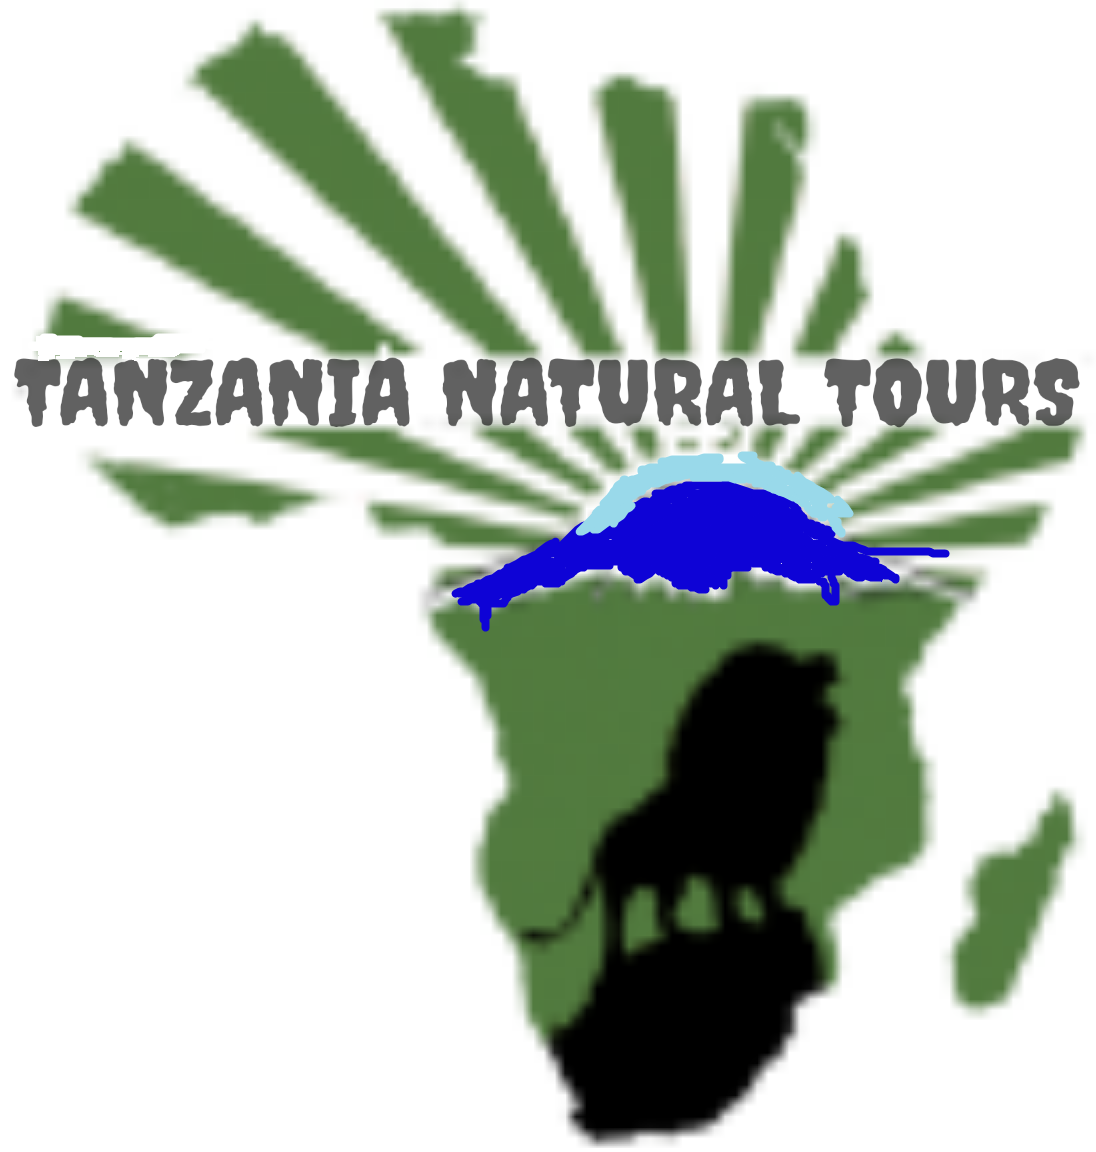 5 Days-Kilimanjaro Bike Tour Via Marangu route 2022 packages, bike trek Kilimanjaro price ,mountain Bike tour itinerary, Bike trek to Summit Five days Kilimanjaro.